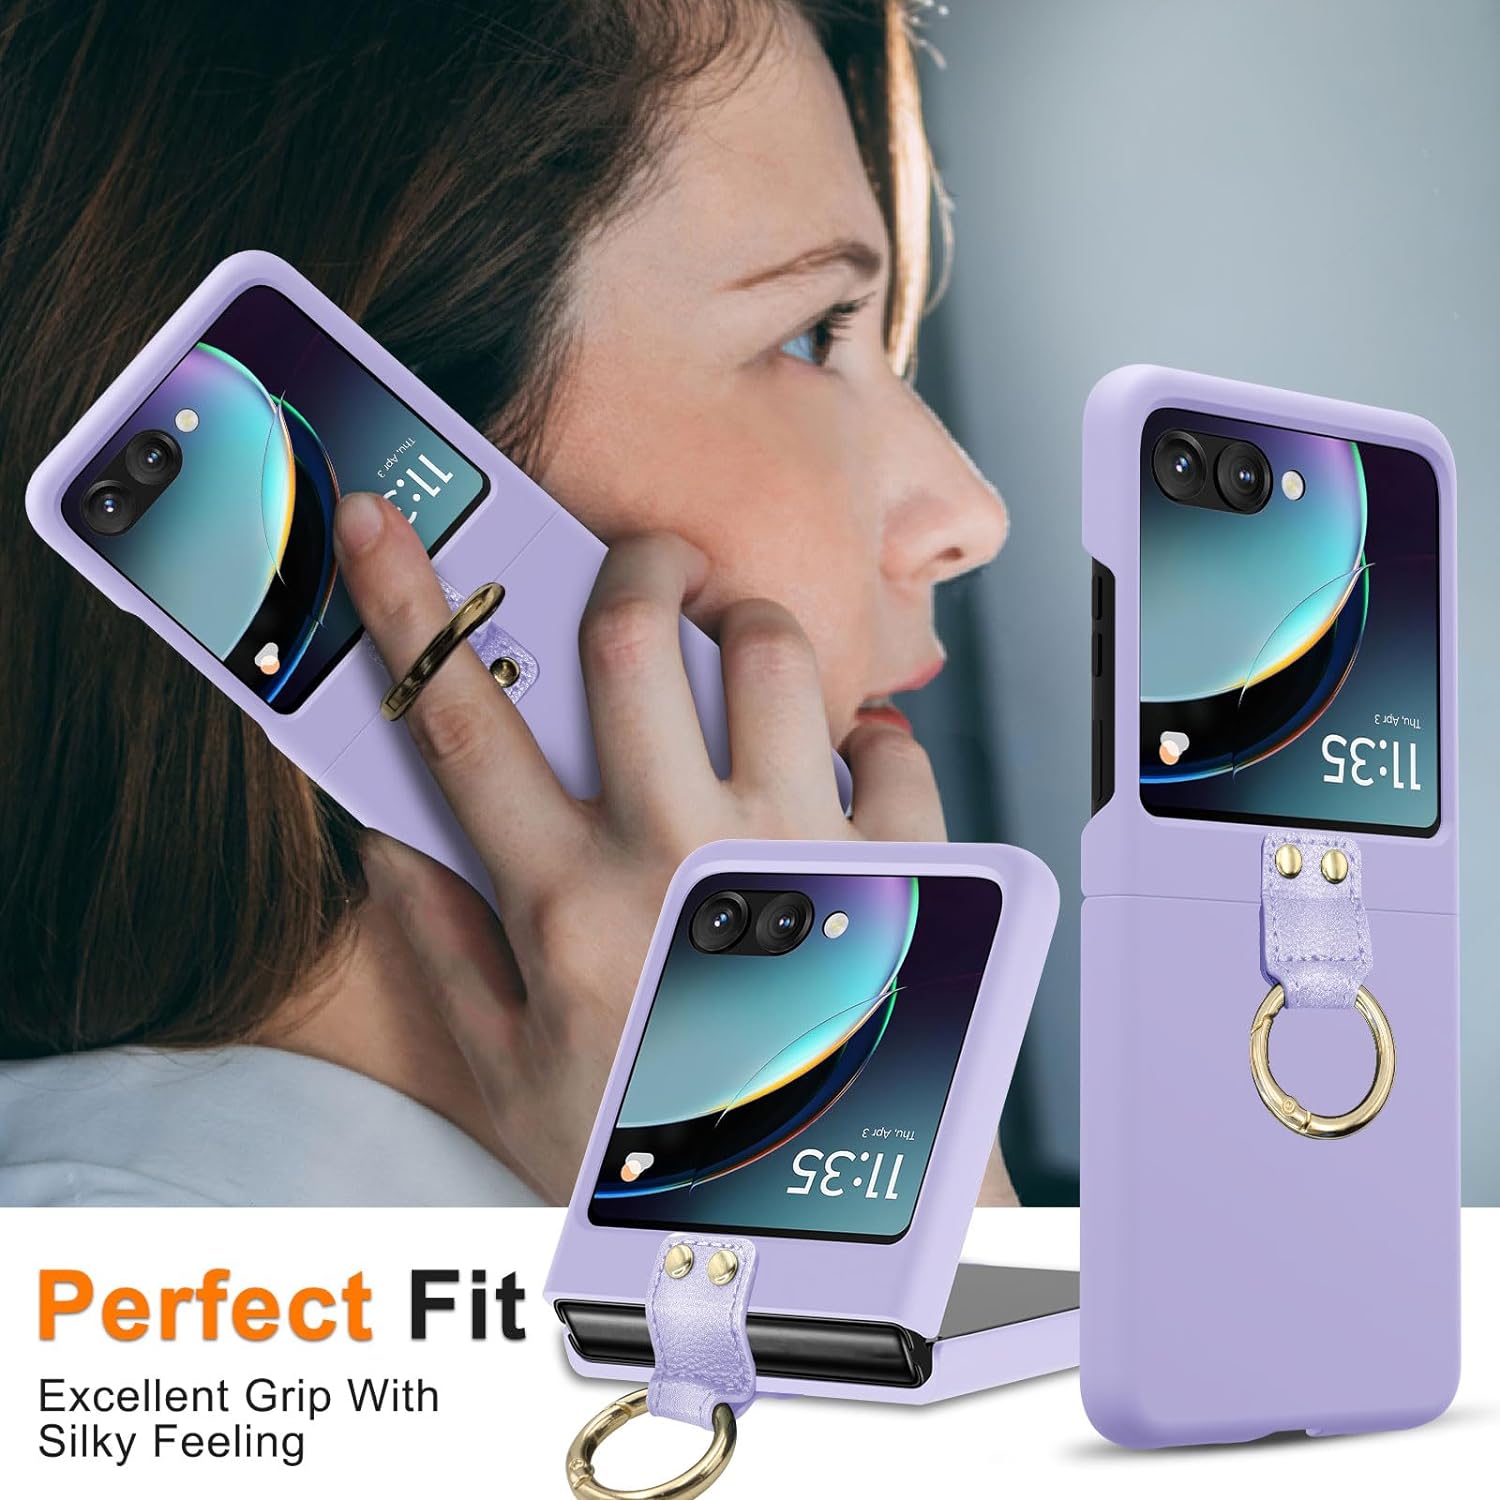 for Motorola Razr+ Plus 2023/Razr 40 Ultra Case, Shockproof Phone Cover, Ultra-Thin Slim Fit Hard PC Protective Cases for Motorola Razr+ Plus 2023/Razr 40 Ultra, Lavender